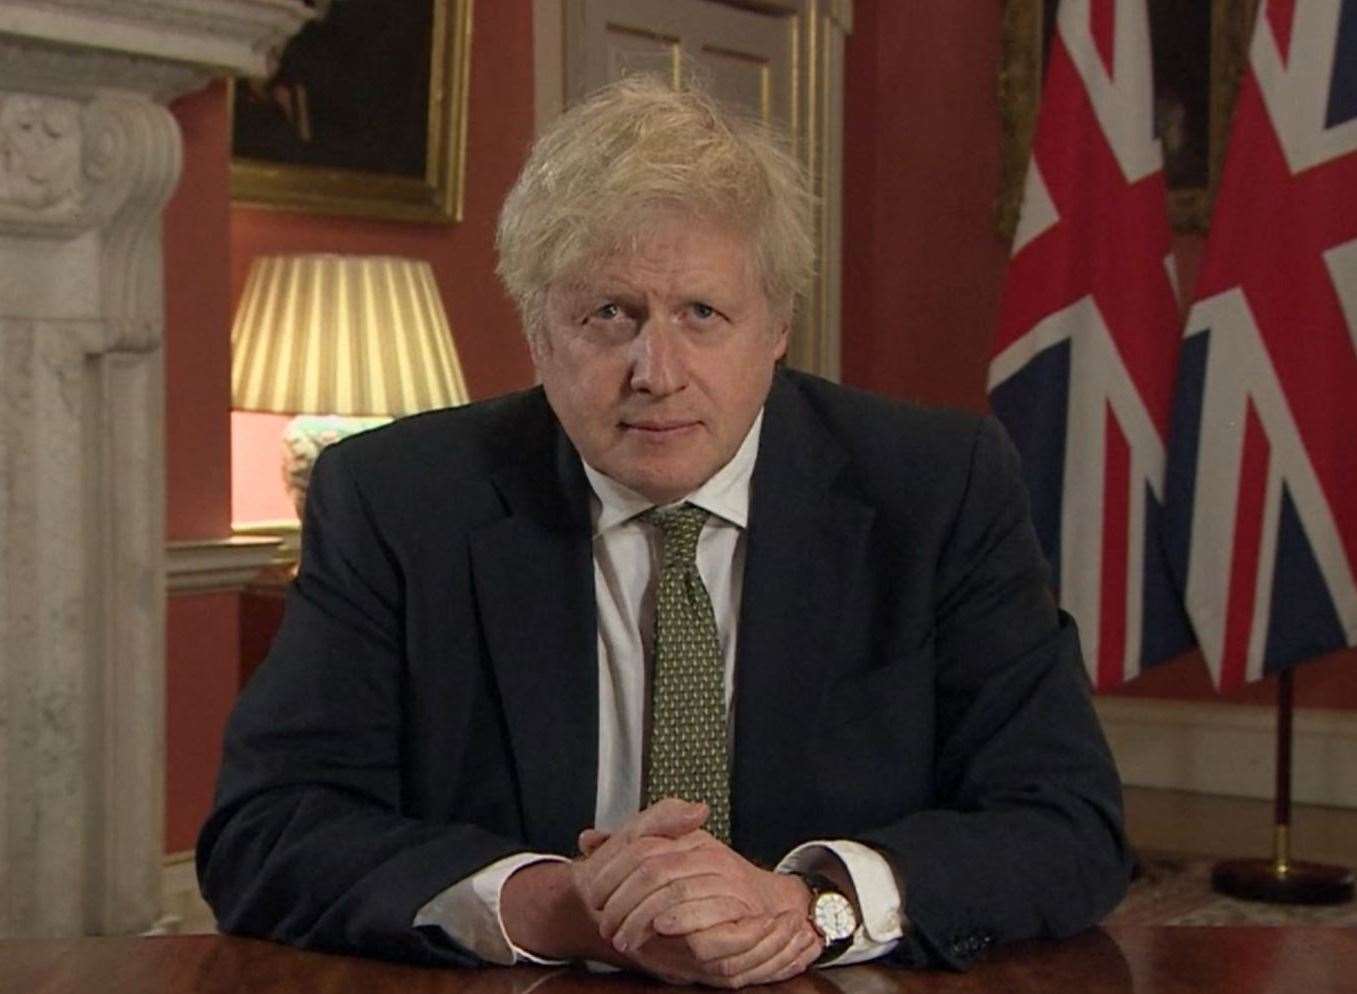 Prime Minister Boris Johnson announced the first Covid lockdown in March 2020